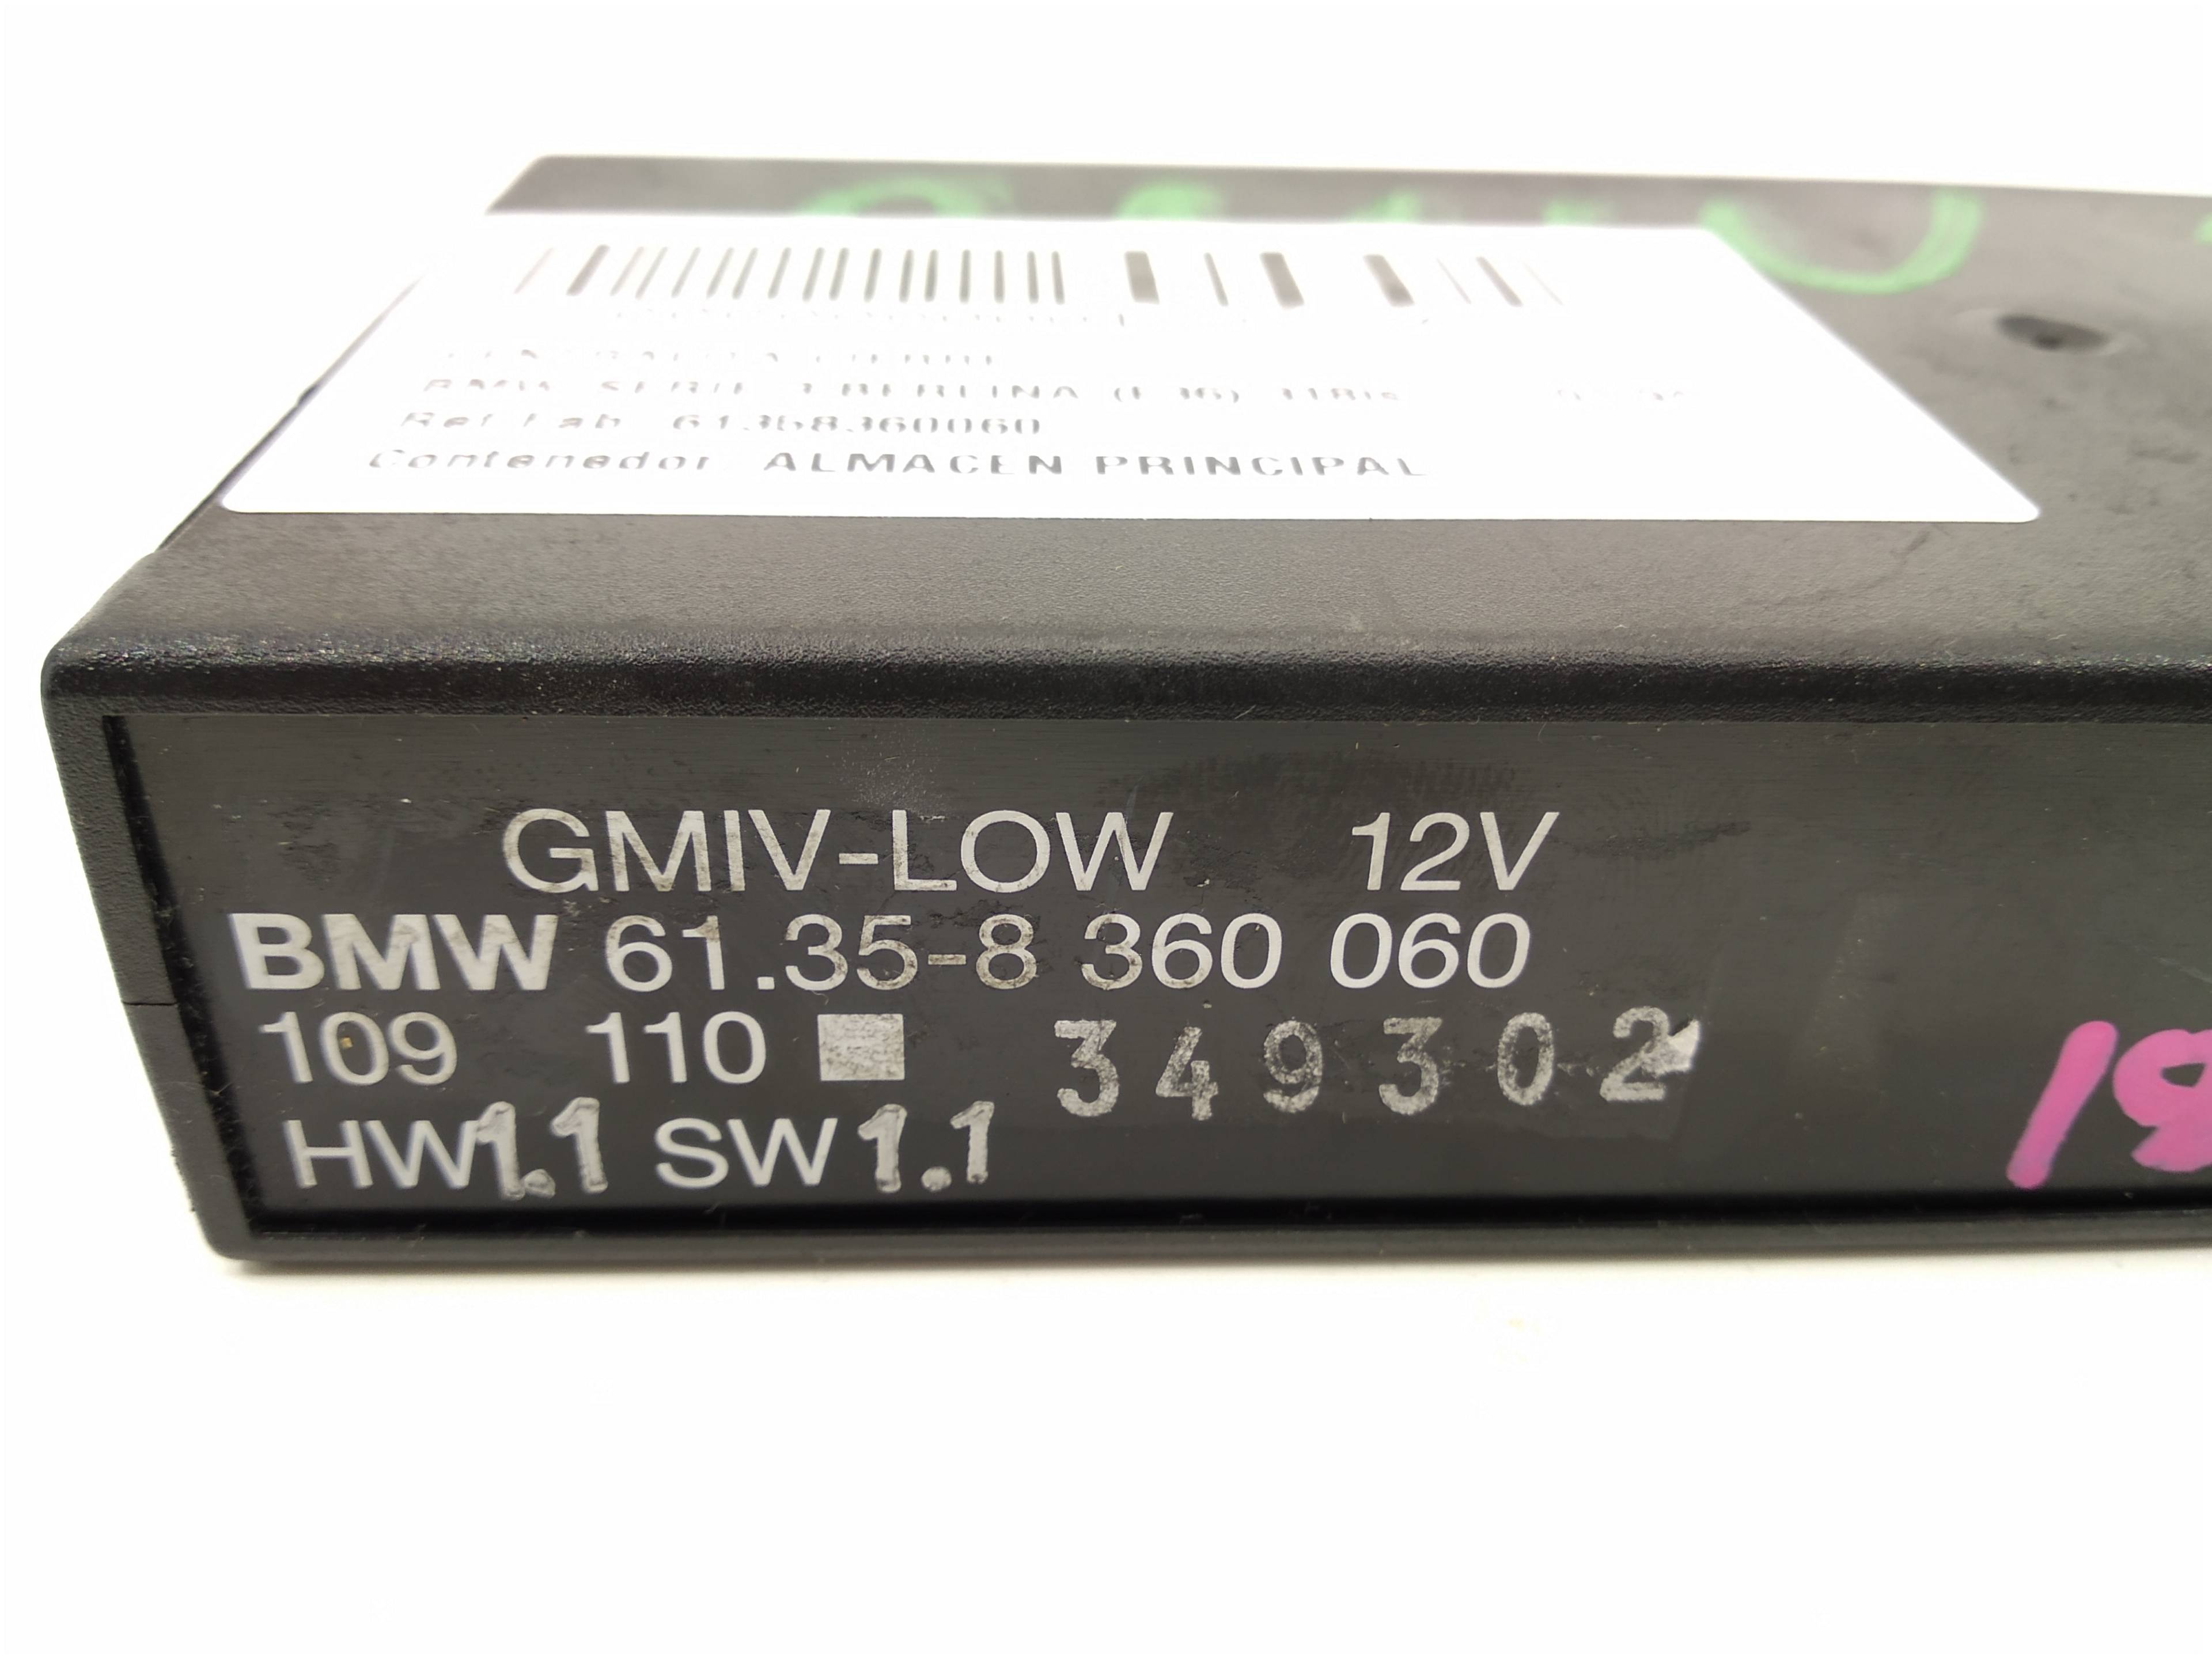 BMW 3 Series E36 (1990-2000) Другие блоки управления 61358360060, 61358360060, 61358360060 19095023